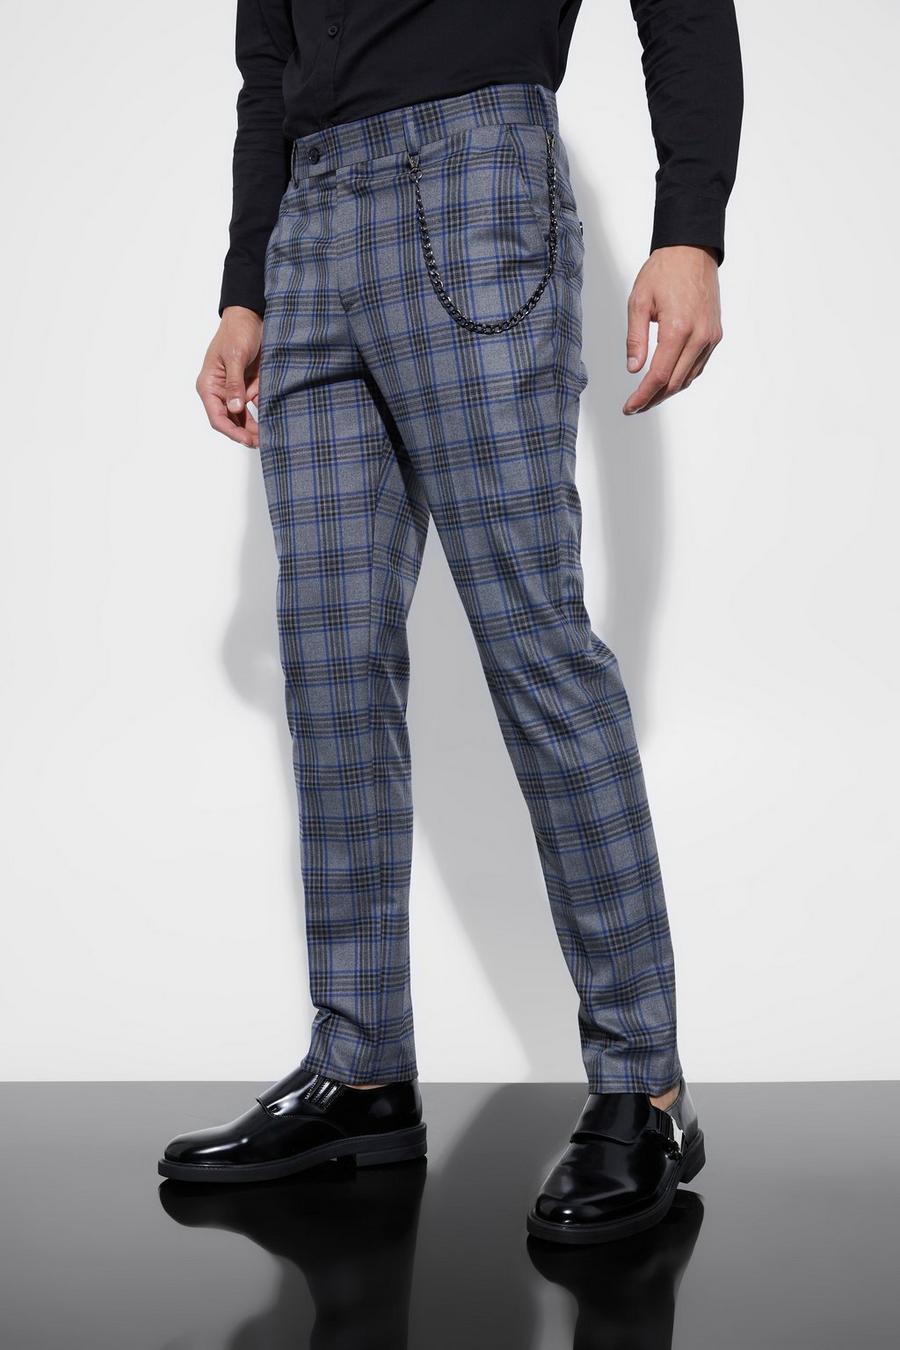 Men's Plaid Pants, Checkered Pants